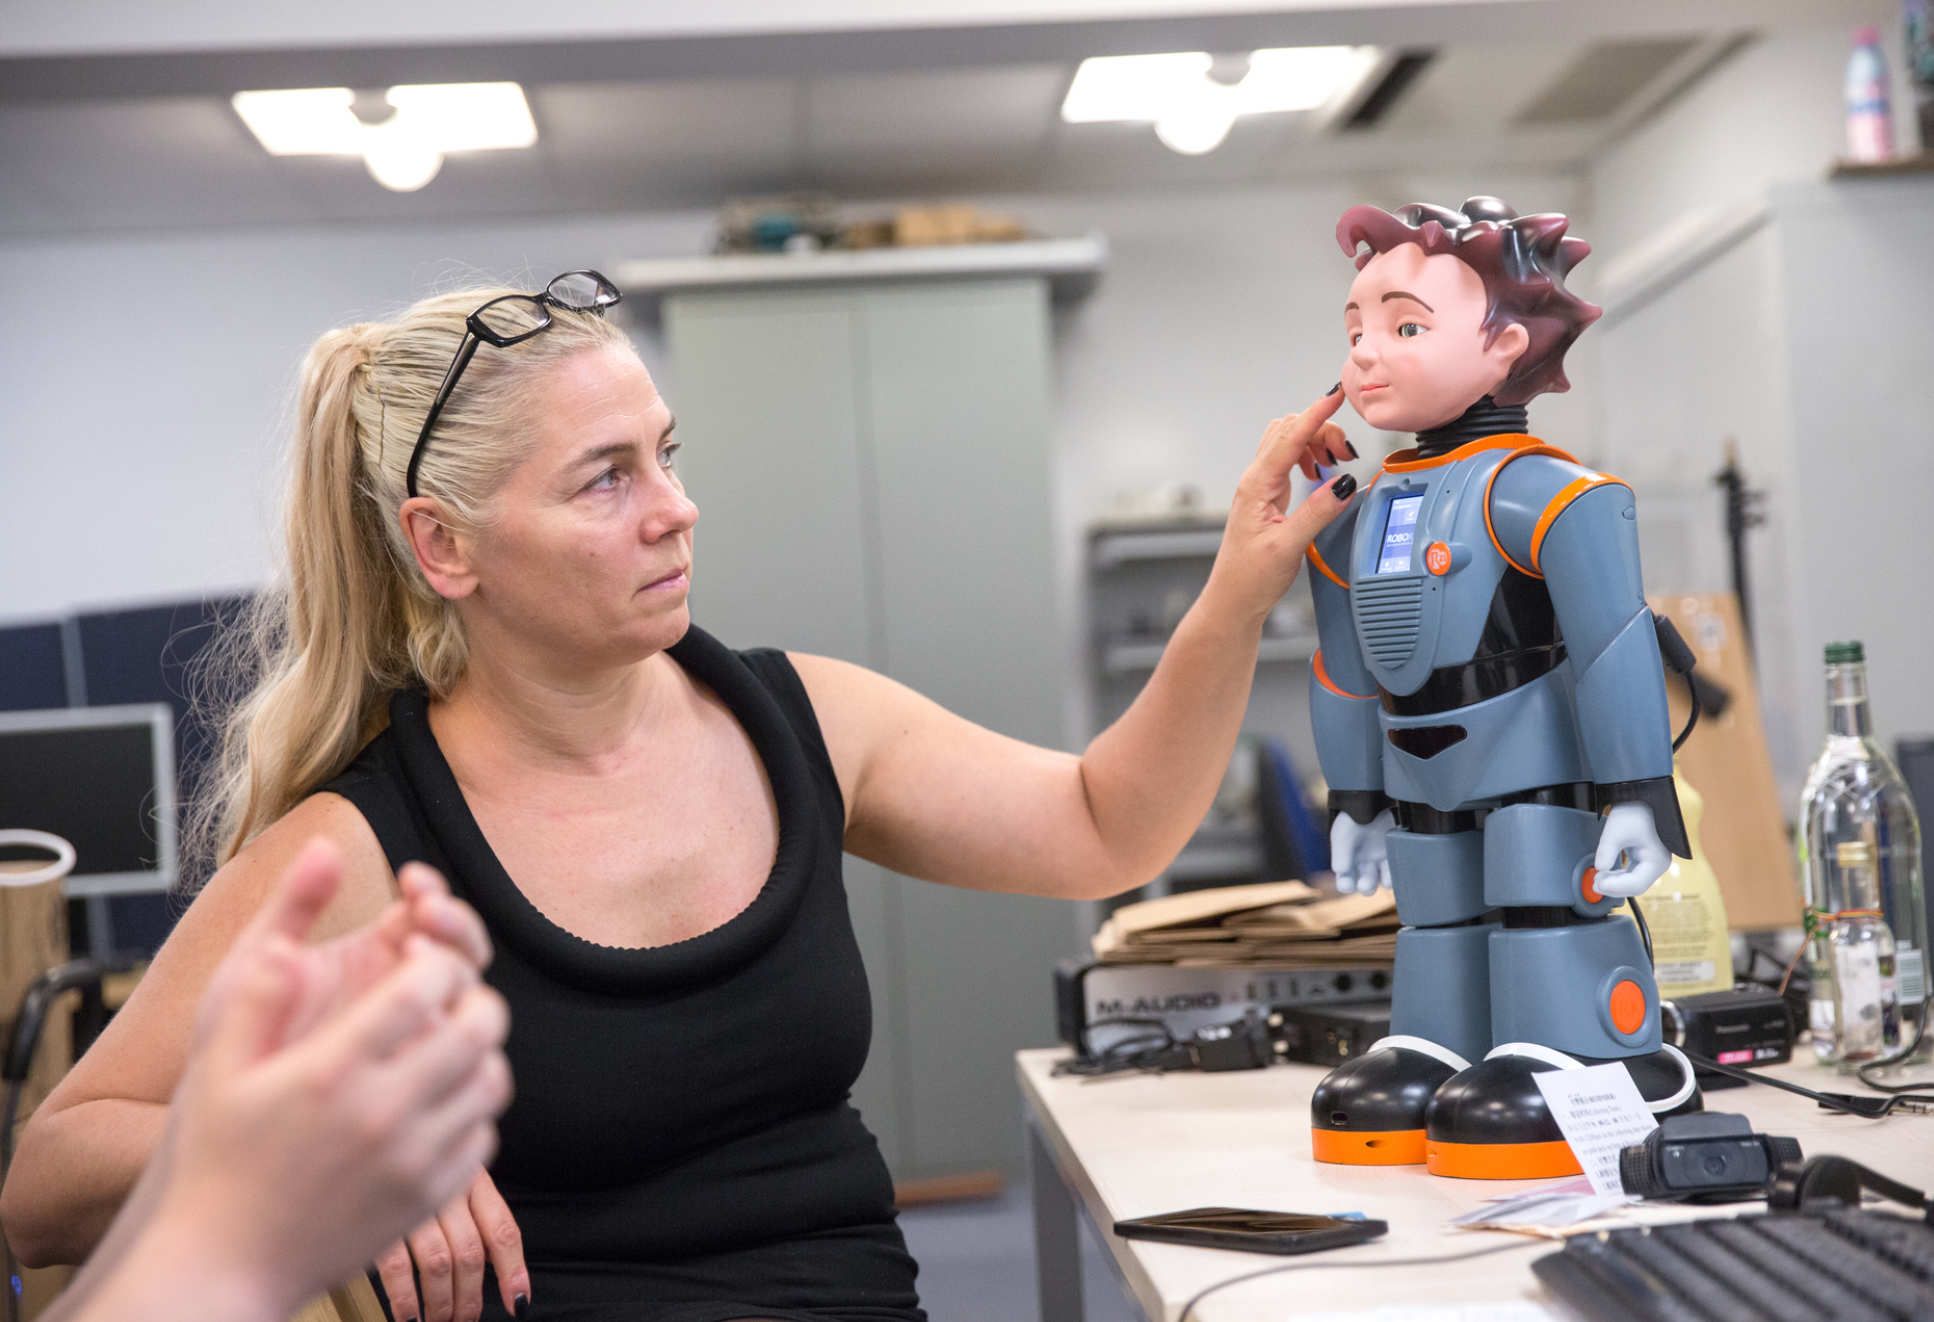 Professor Maja Pantic points at her robot